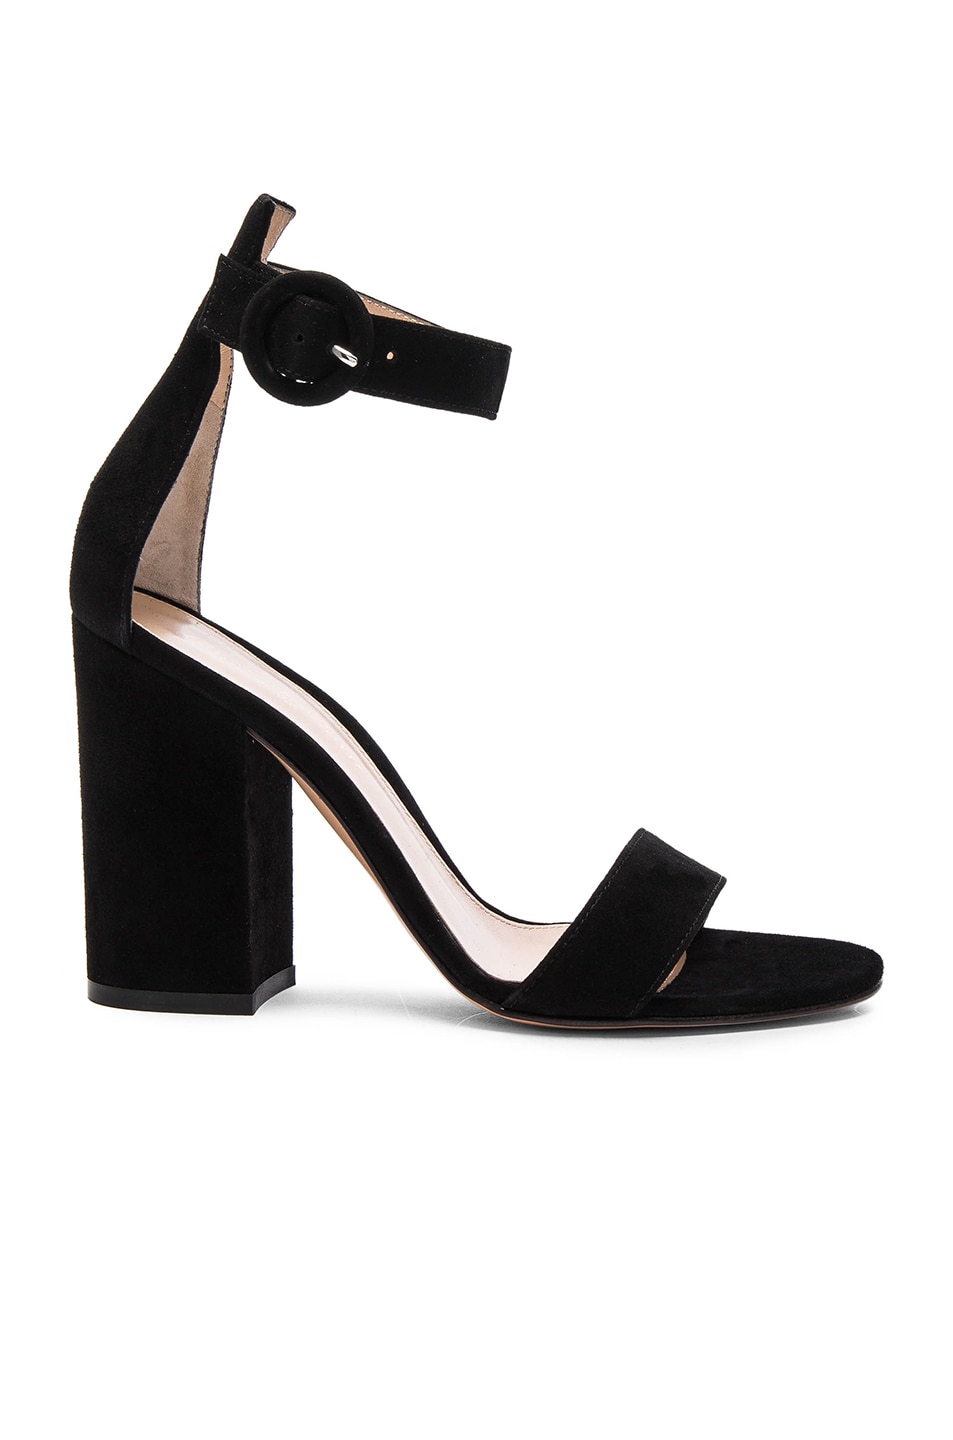 GIANVITO ROSSI Portofino Suede Block Heel Sandals, Black | ModeSens